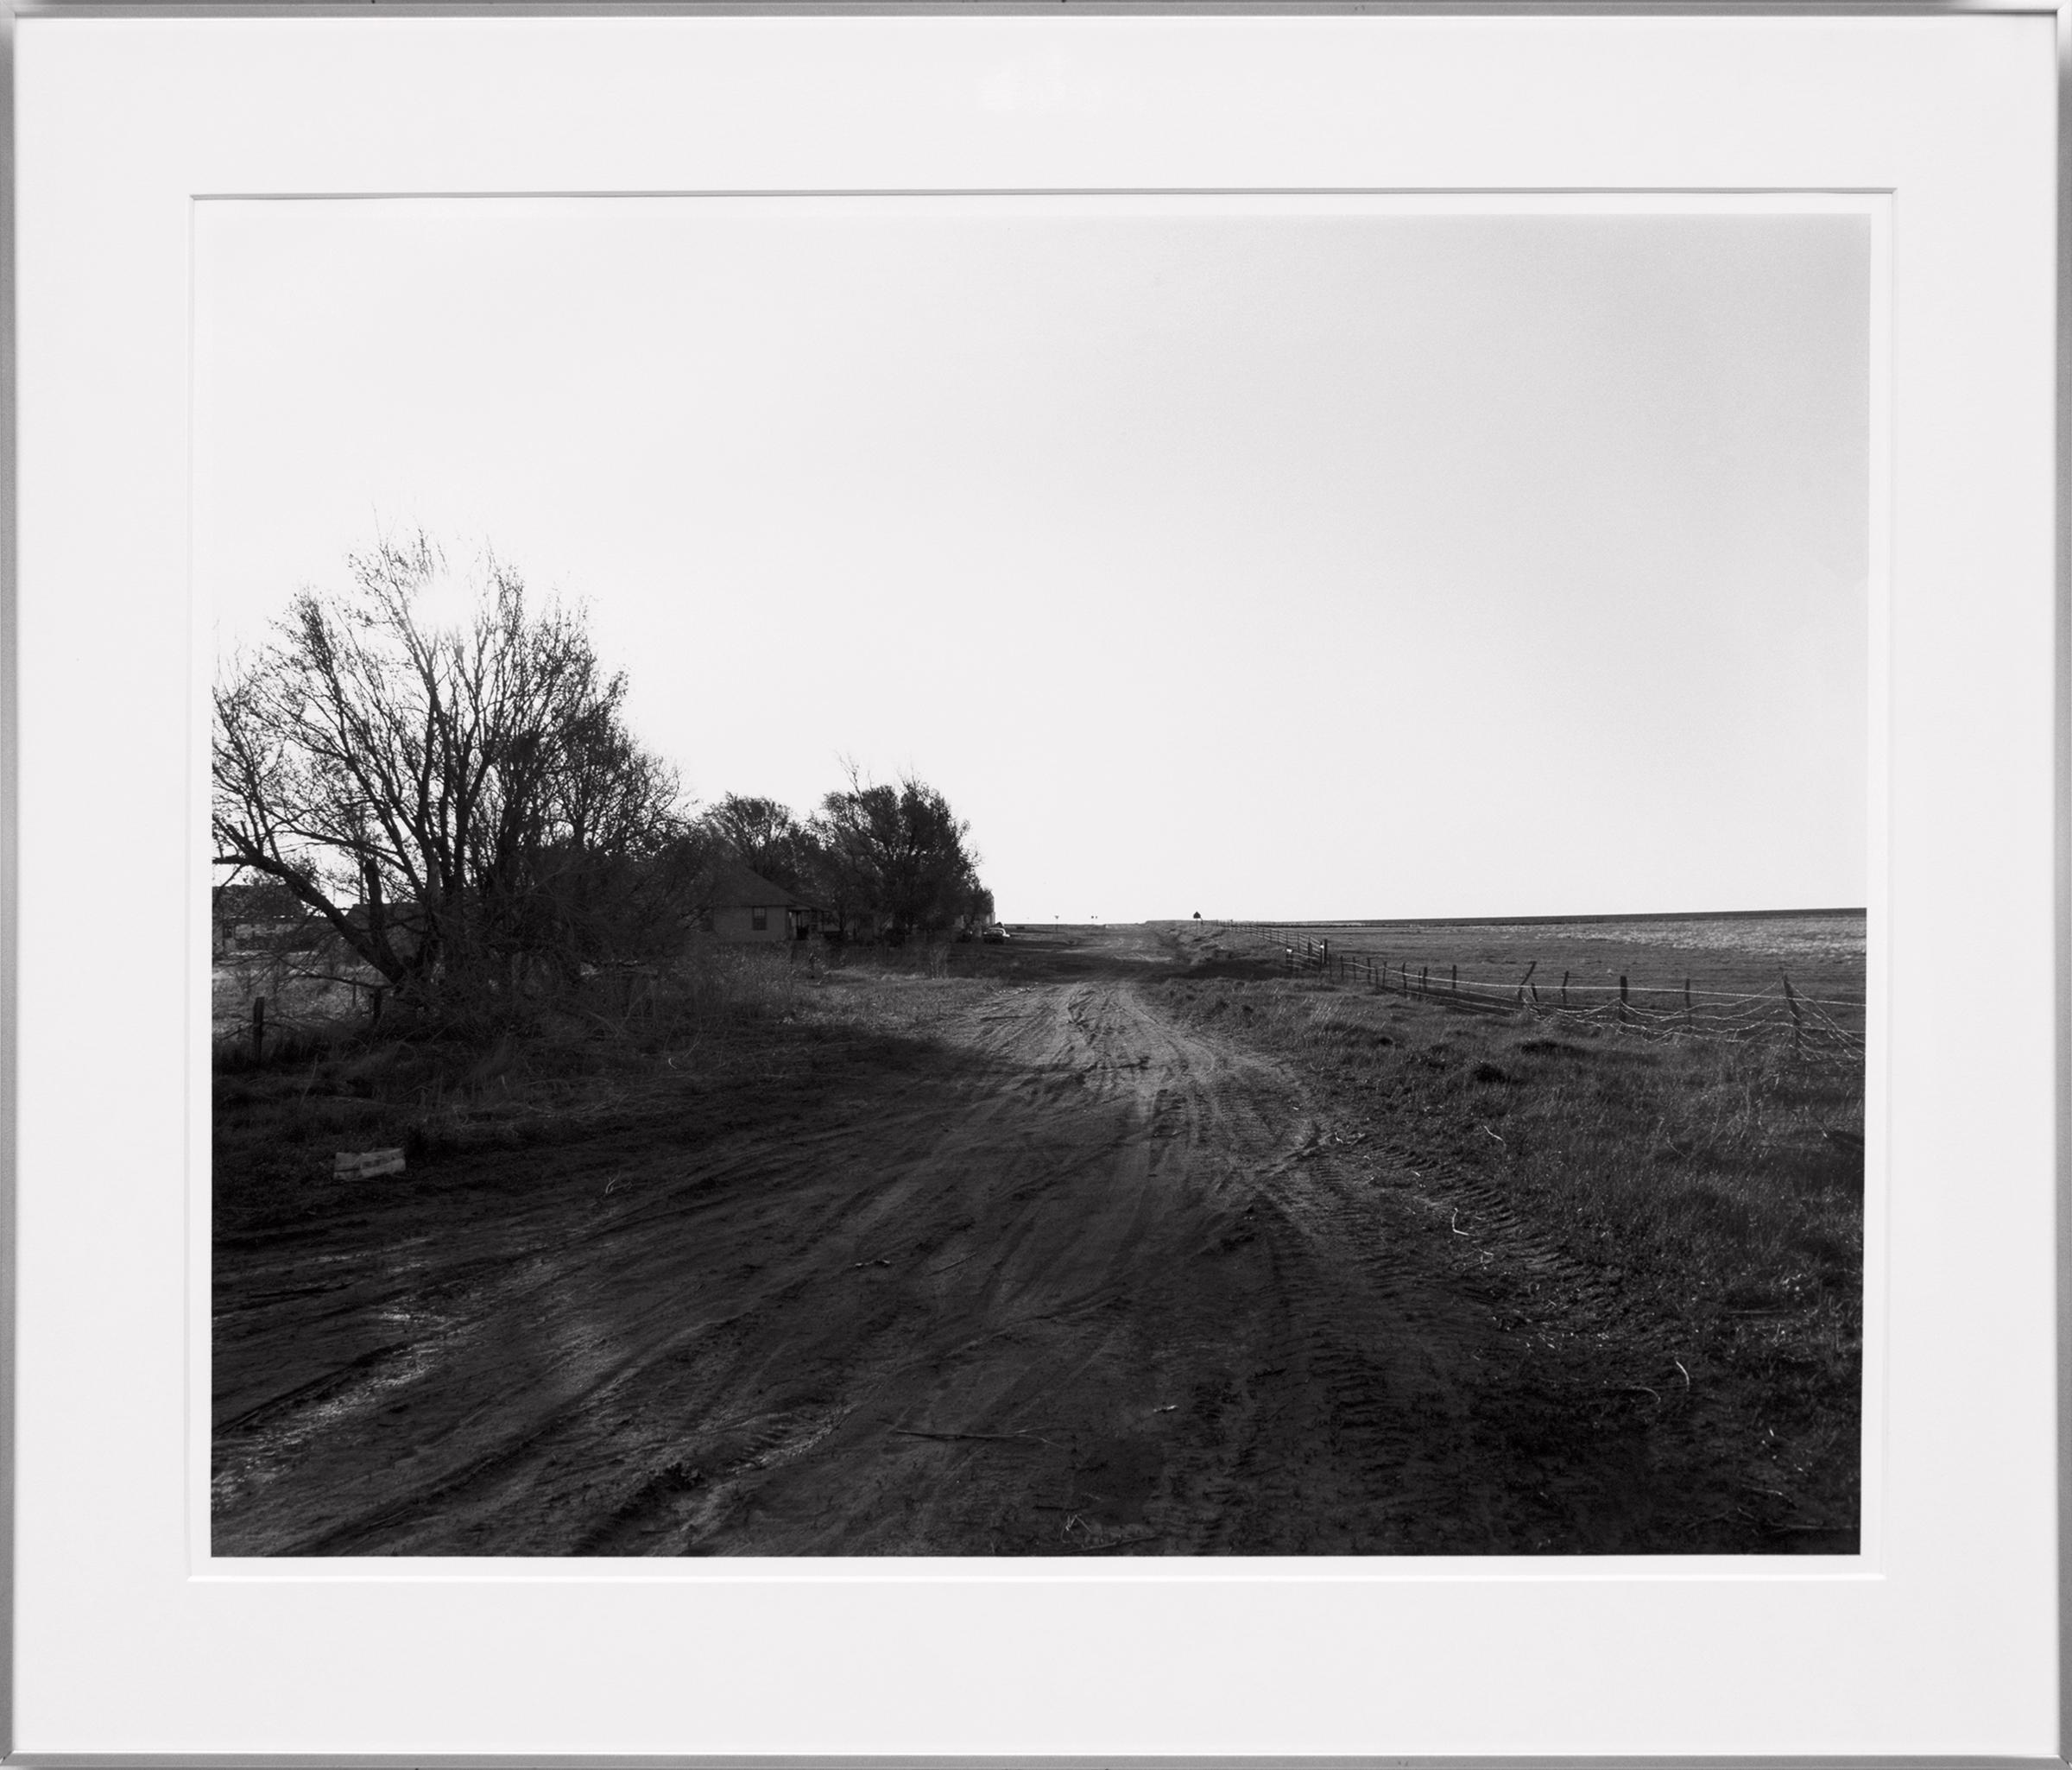 Robert Adams Landscape Photograph - Edge of Briggsdale, Colorado, 'Missouri West' series, Black & White Landscape